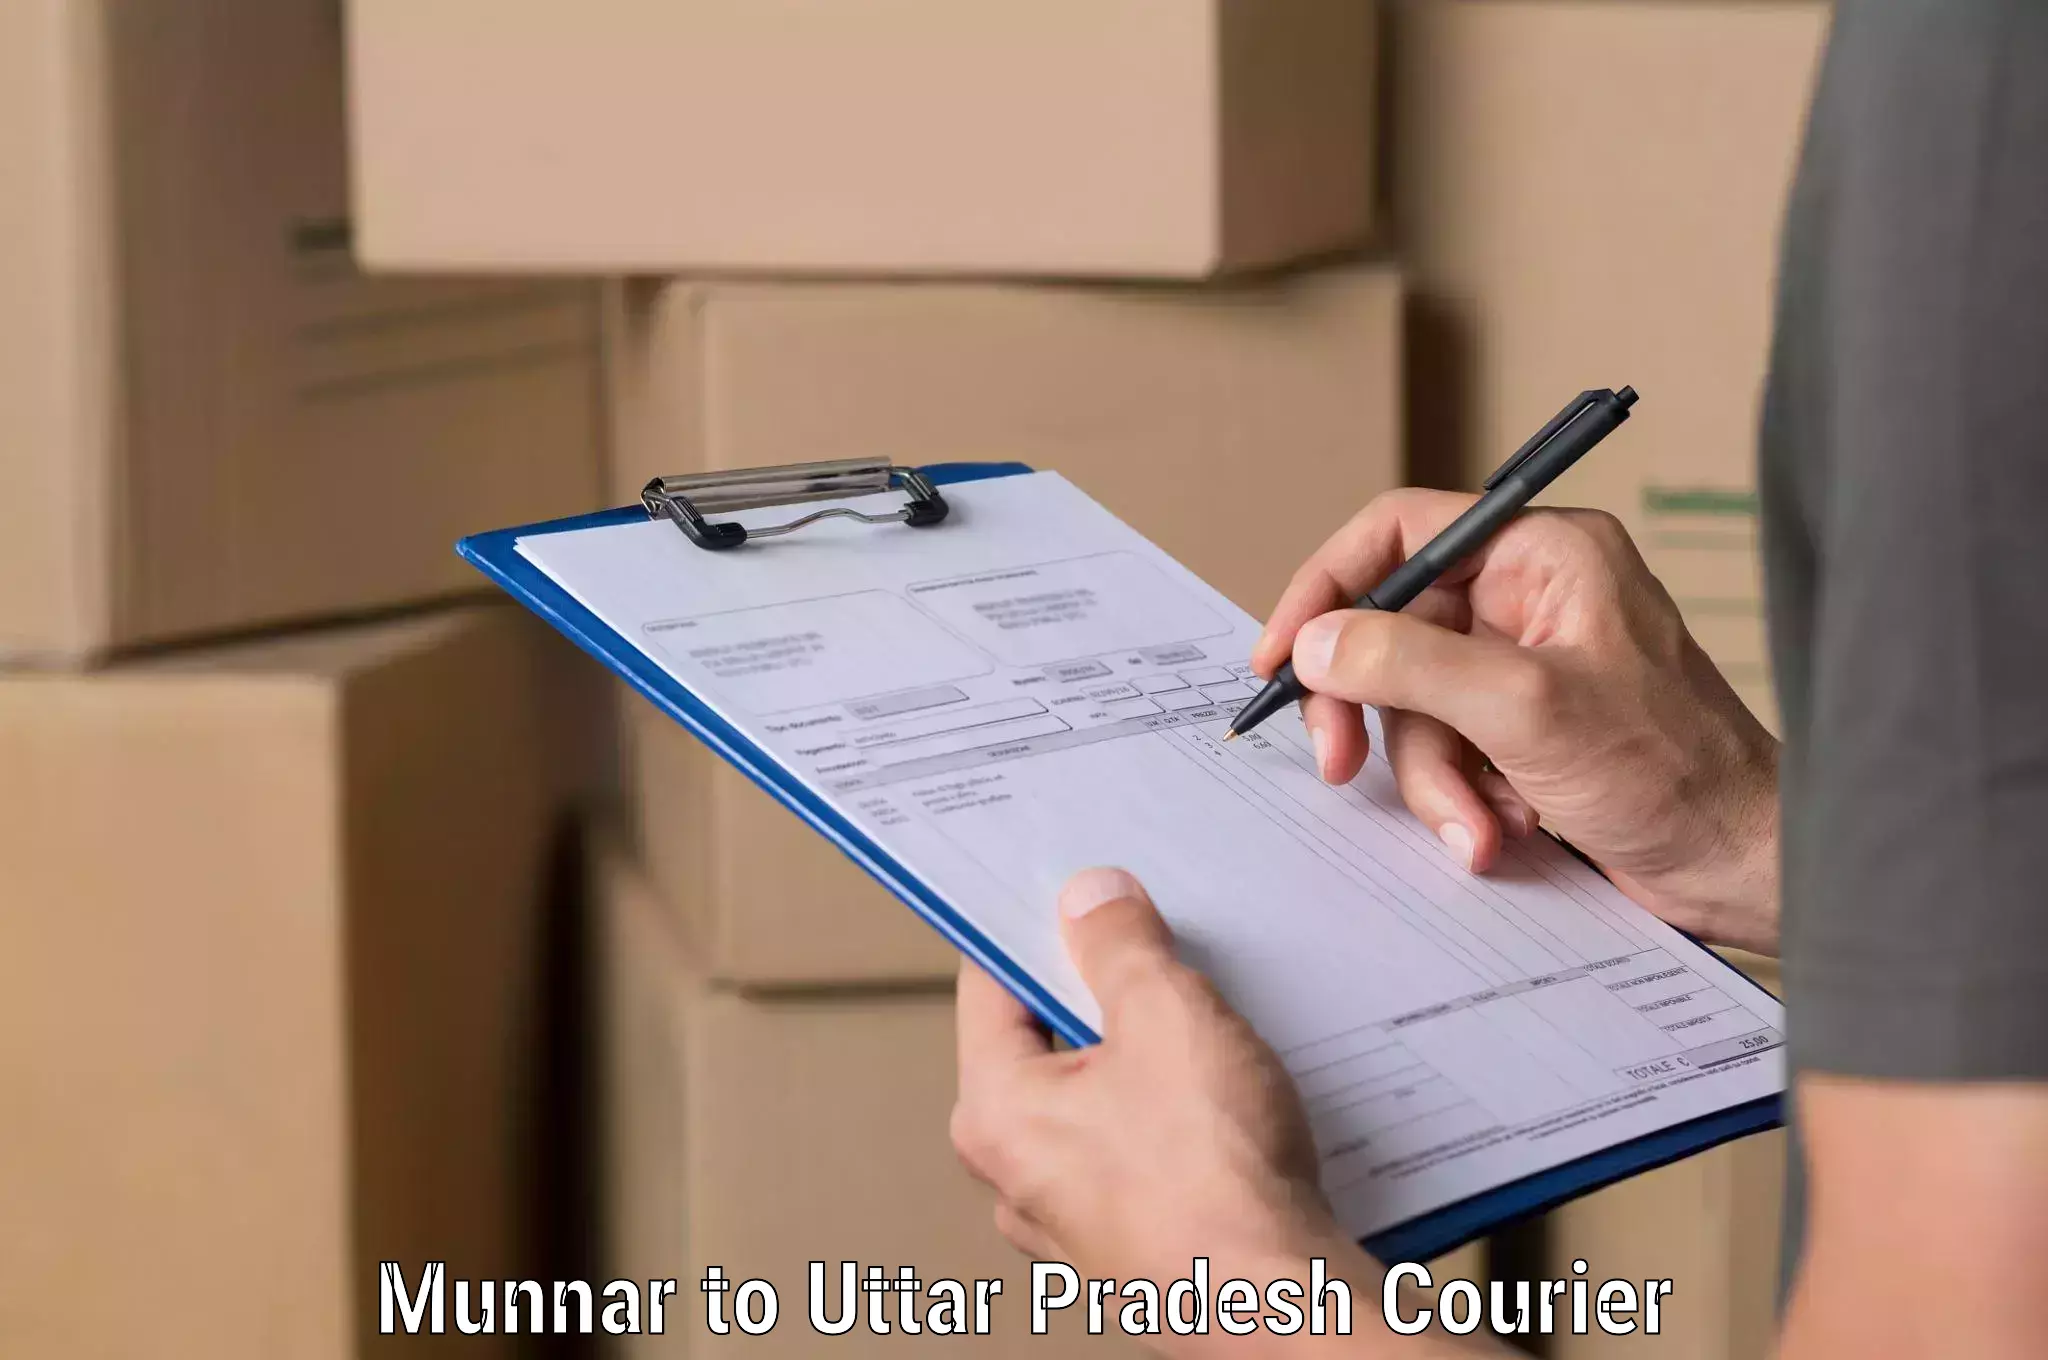 User-friendly courier app Munnar to Sultanpur Avadh